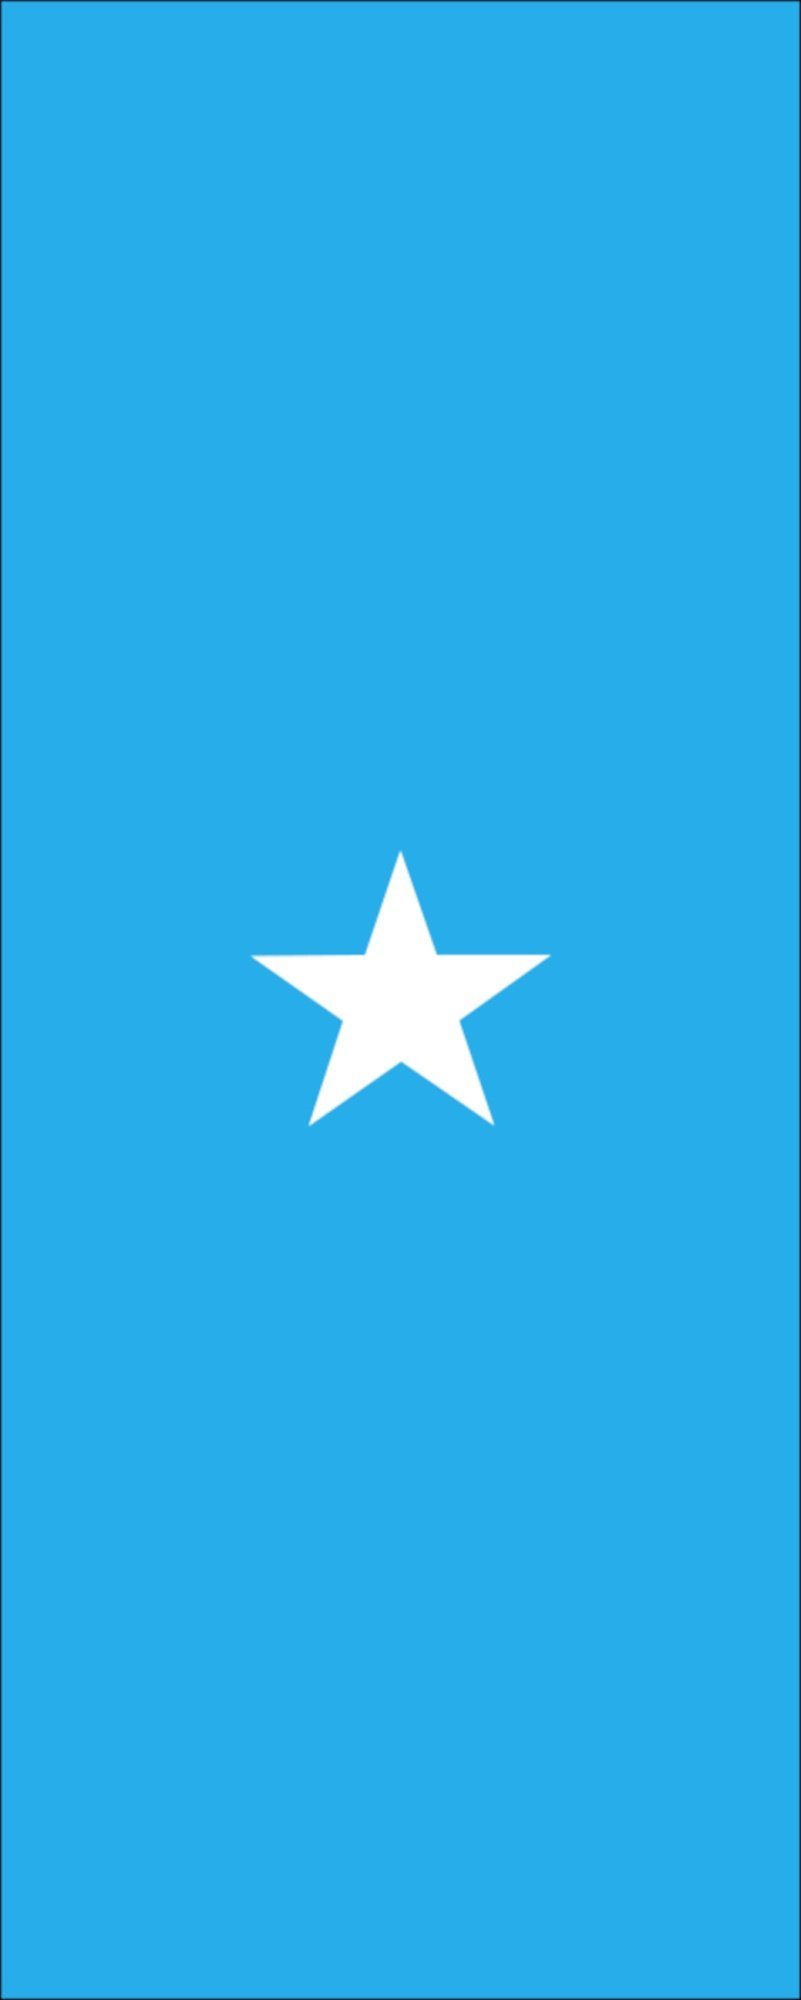 flaggenmeer Flagge Somalia 110 g/m² Hochformat Flagge